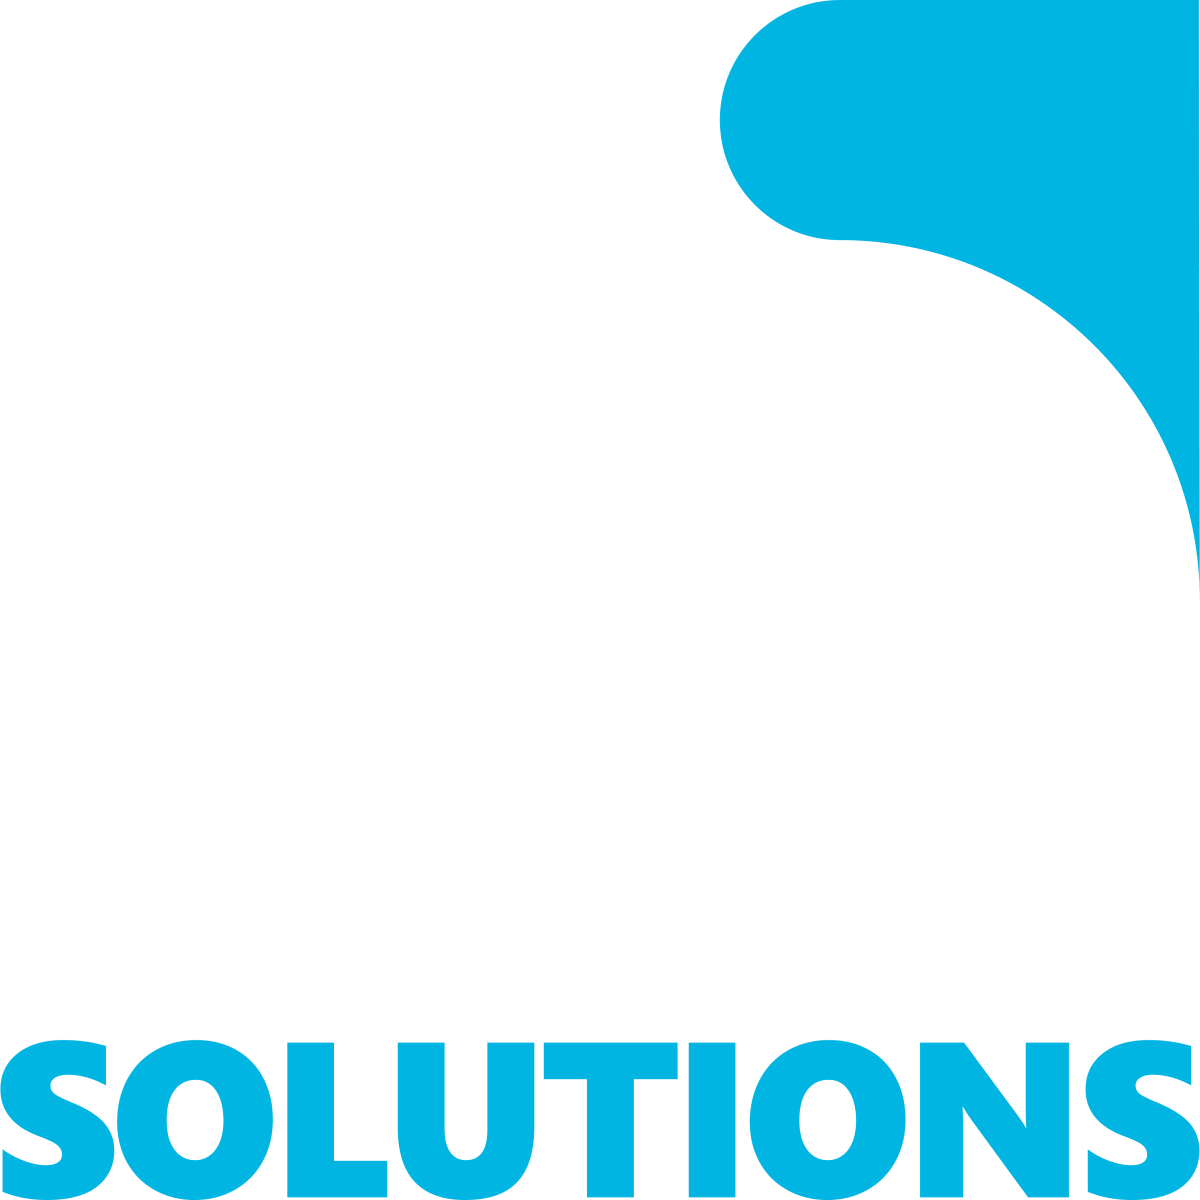 Earthquake Soltions LOGO Image